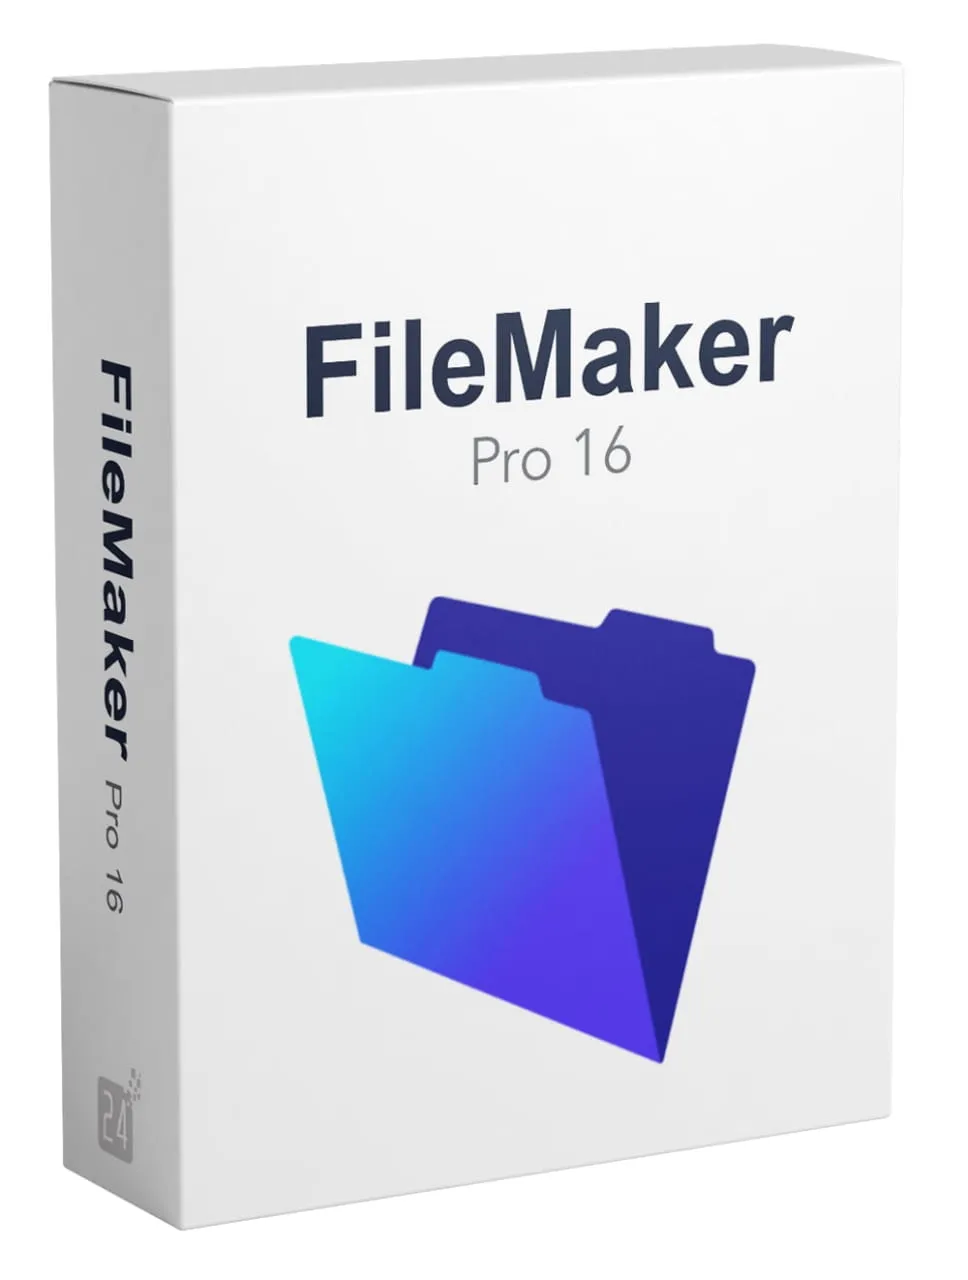  FileMaker Pro 16